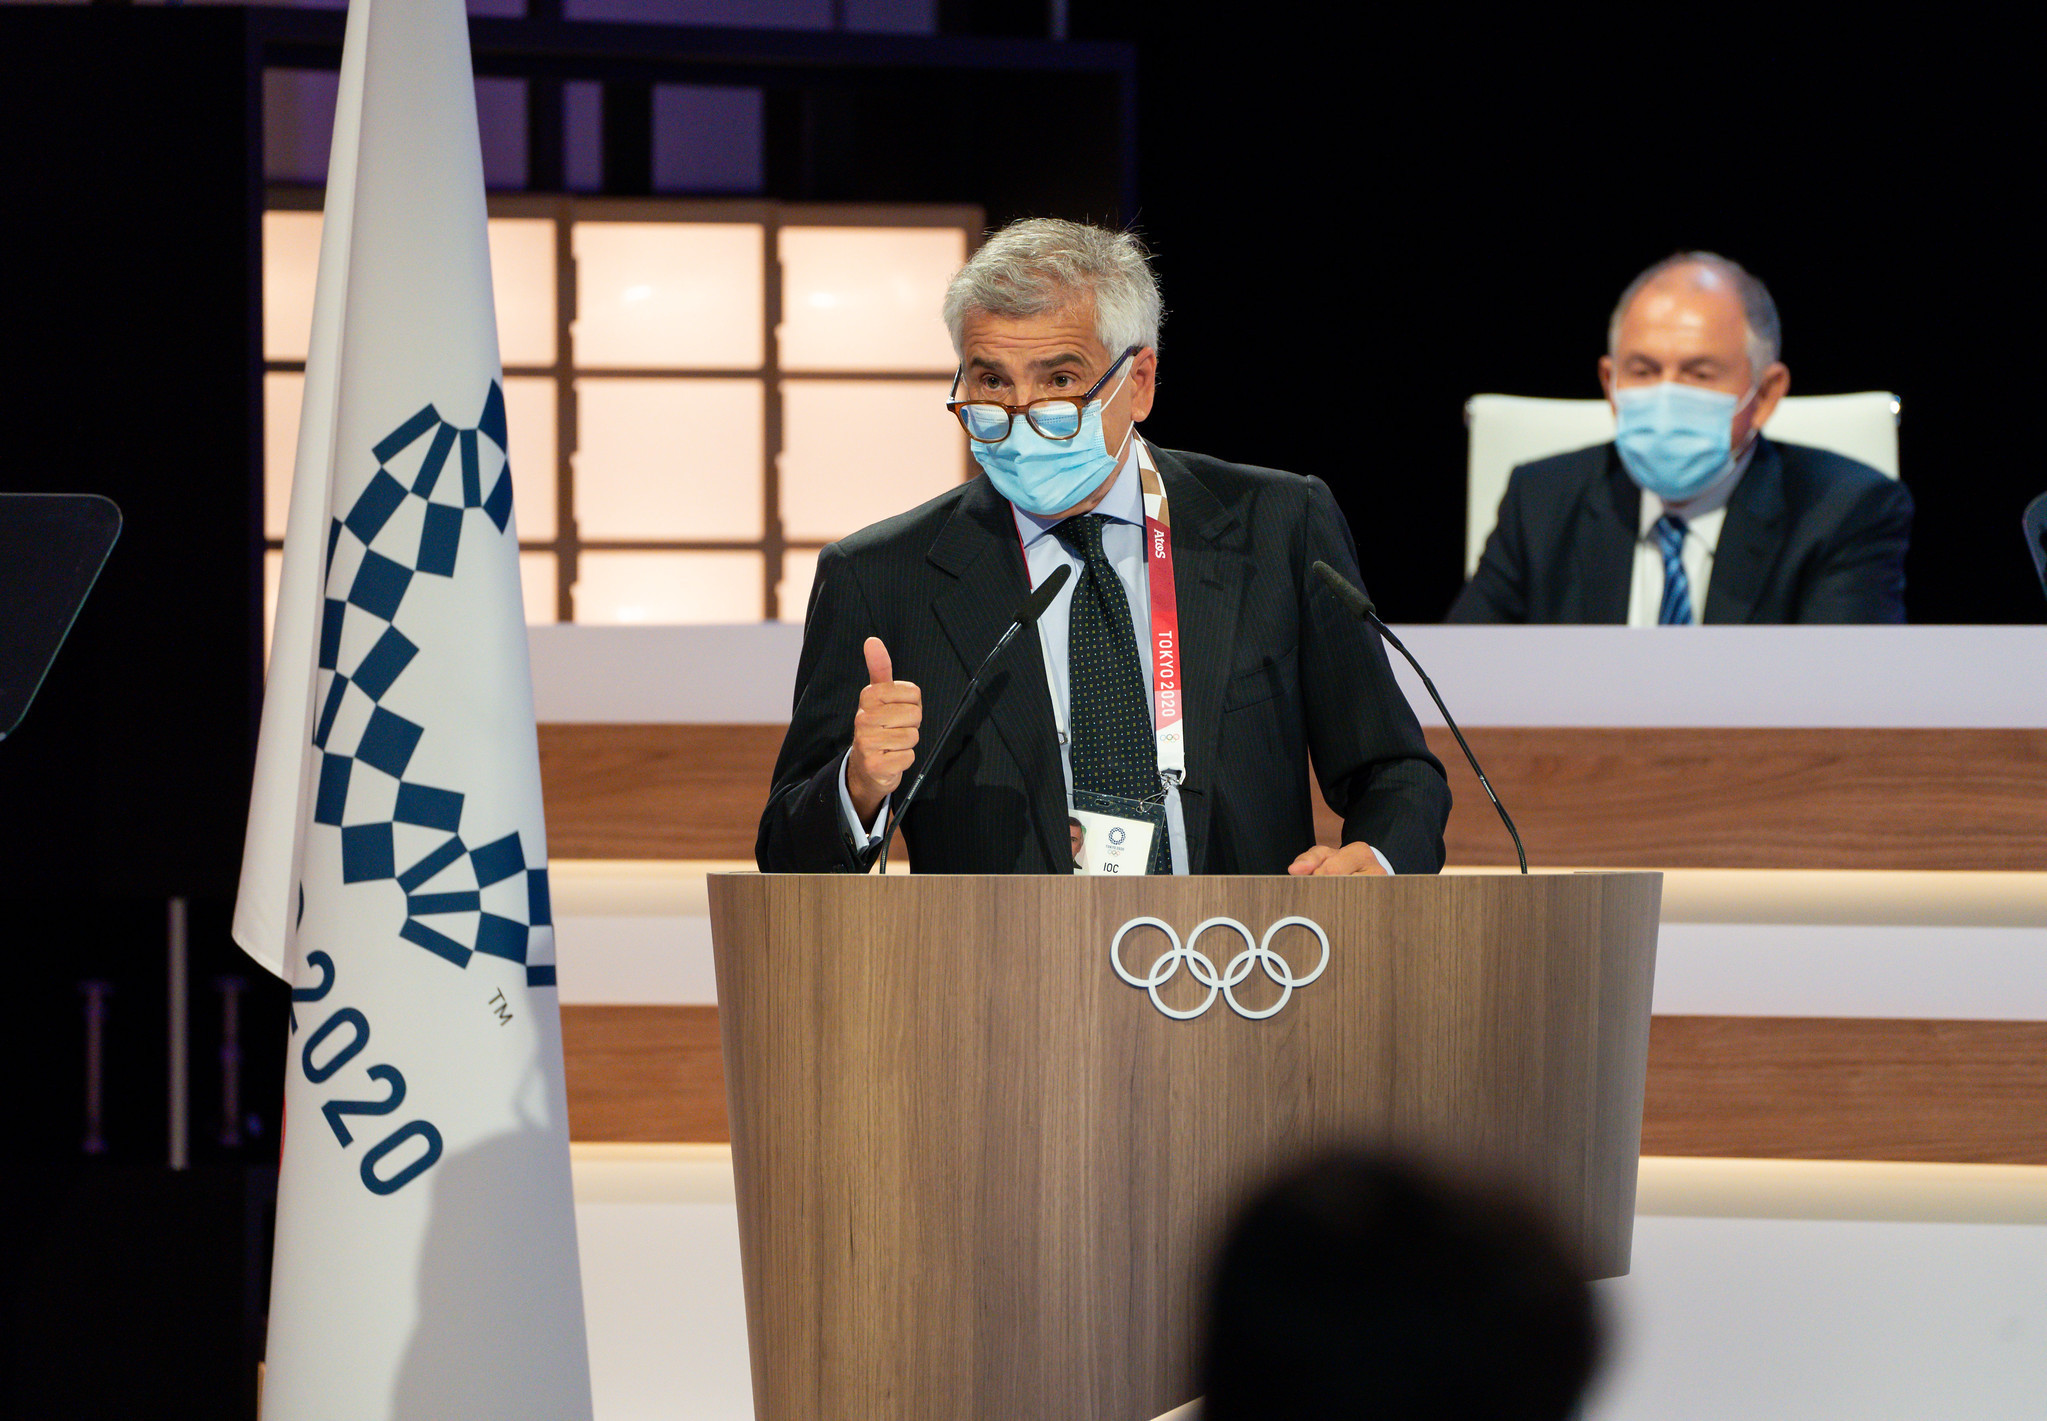 Juan Antonio Samaranch stressed the need for Beijing 2022 to have spectators present ©IOC